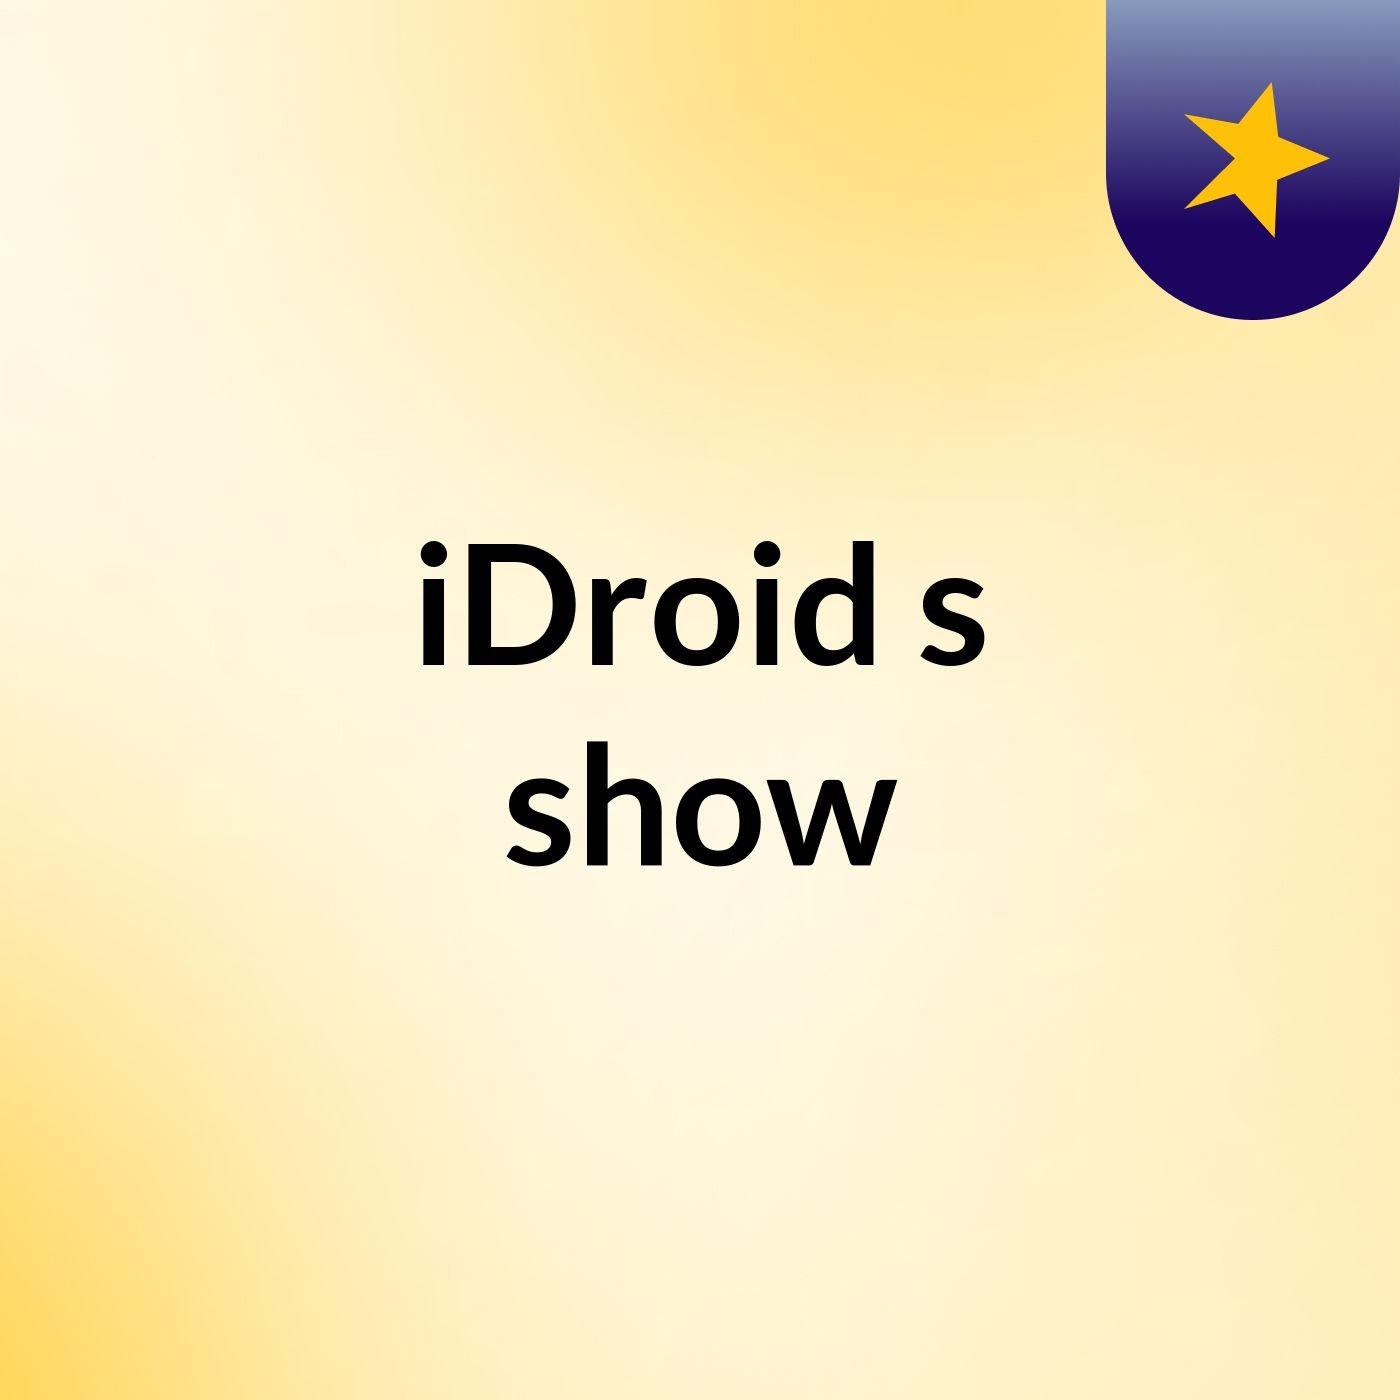 iDroid's show